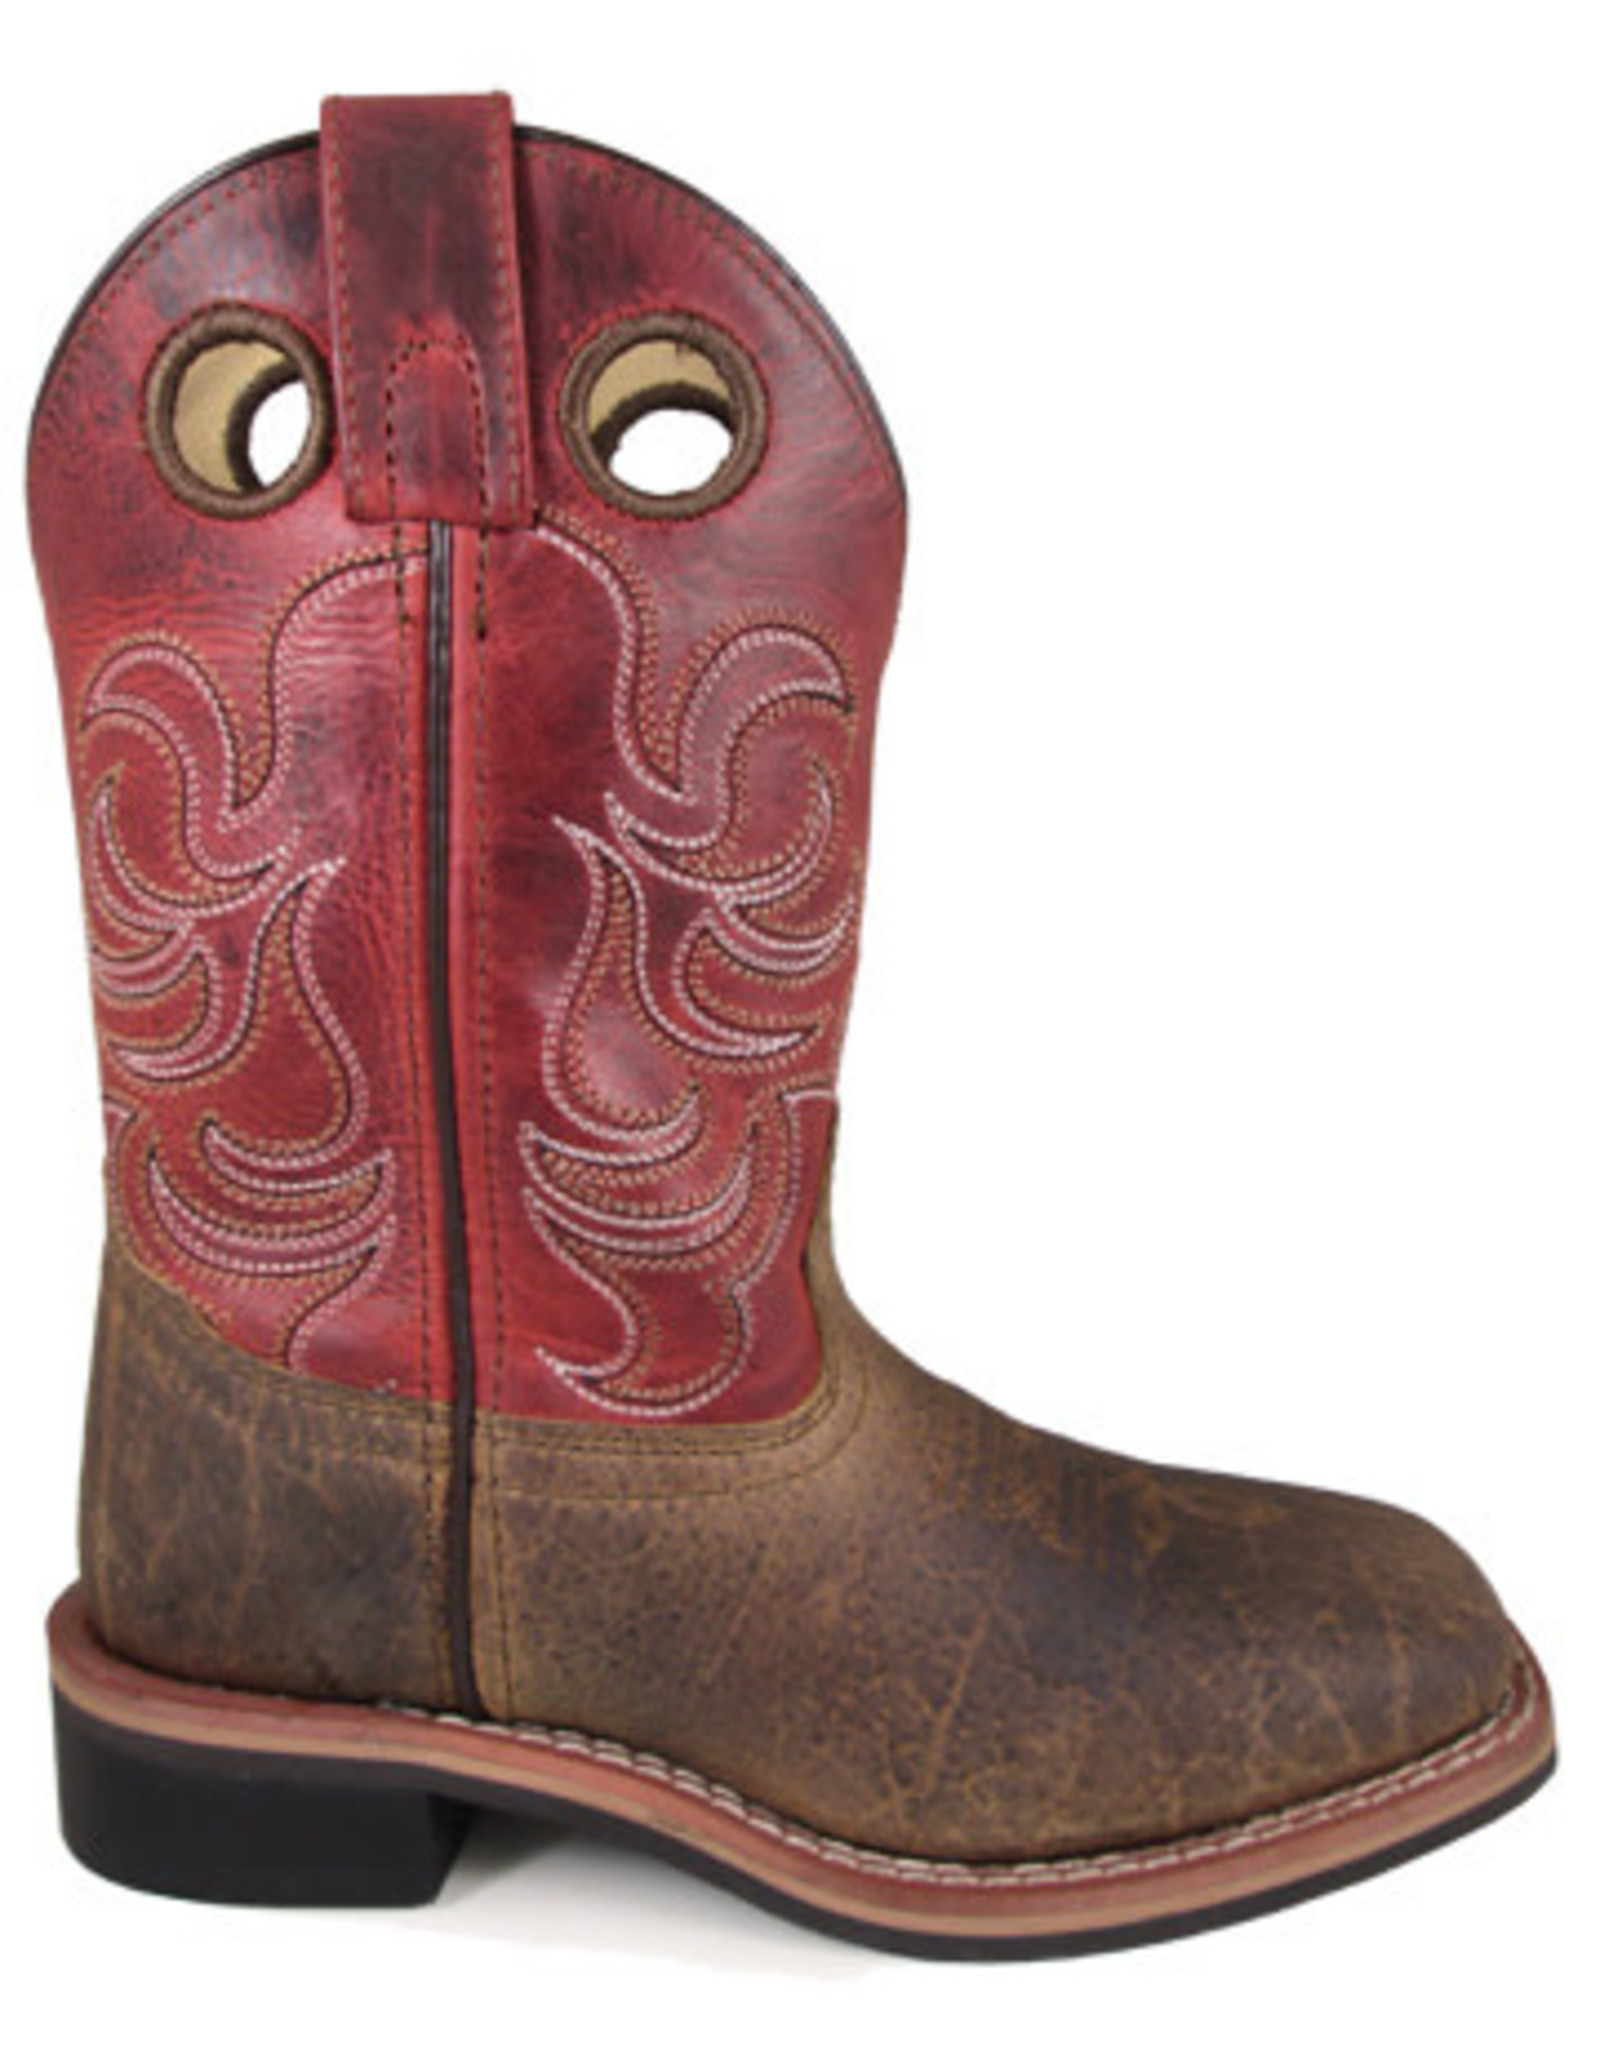 Smoky Mountain Youth Jesse 3919 Western Boots